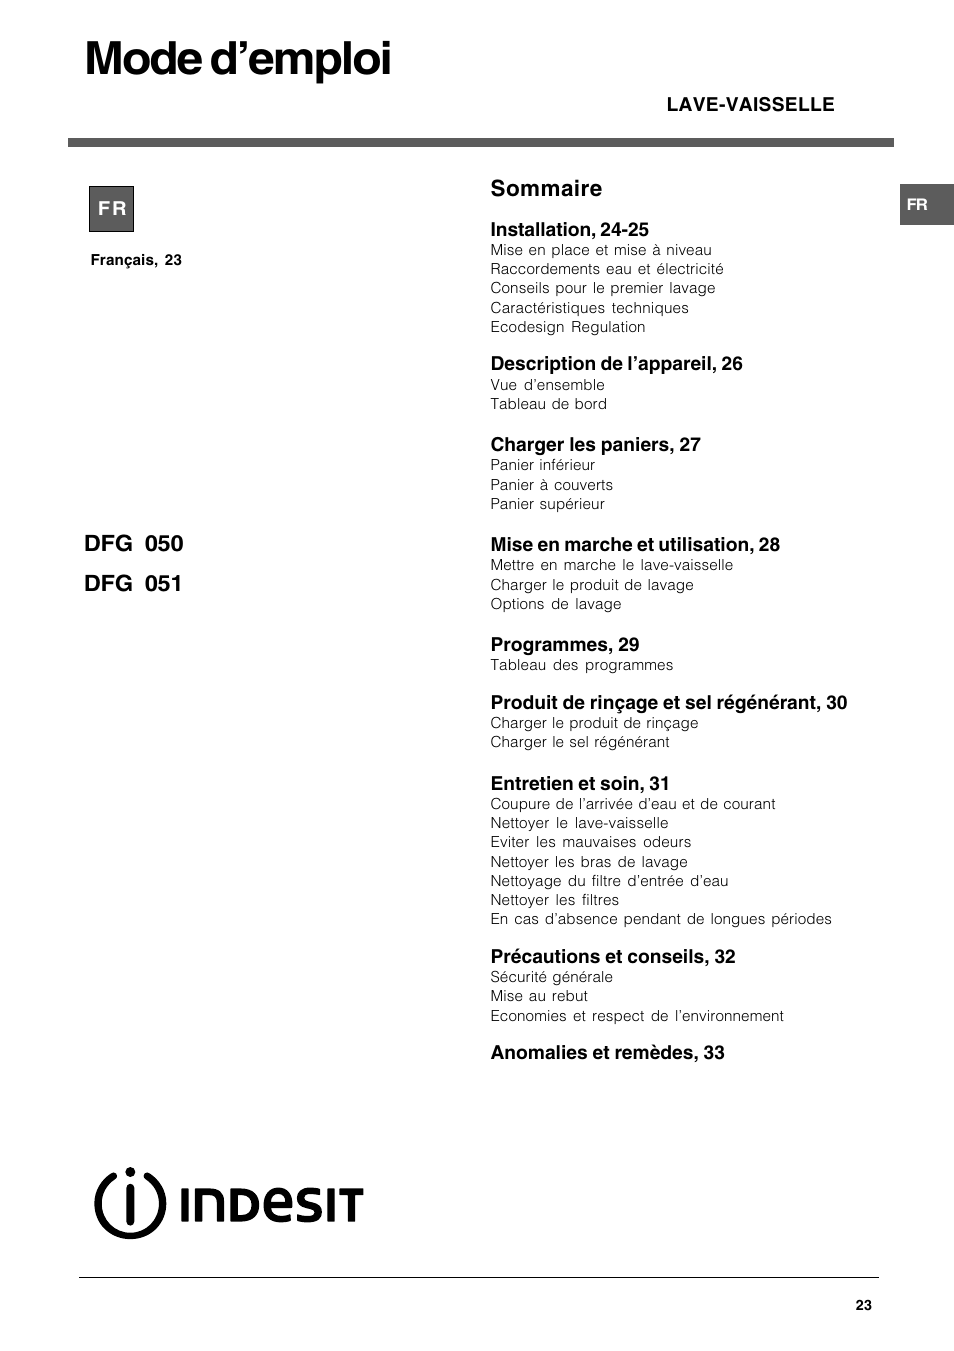 Mode d'emploi, Sommaire | Indesit DFG 051 User Manual | Page 23 / 80 |  Original mode